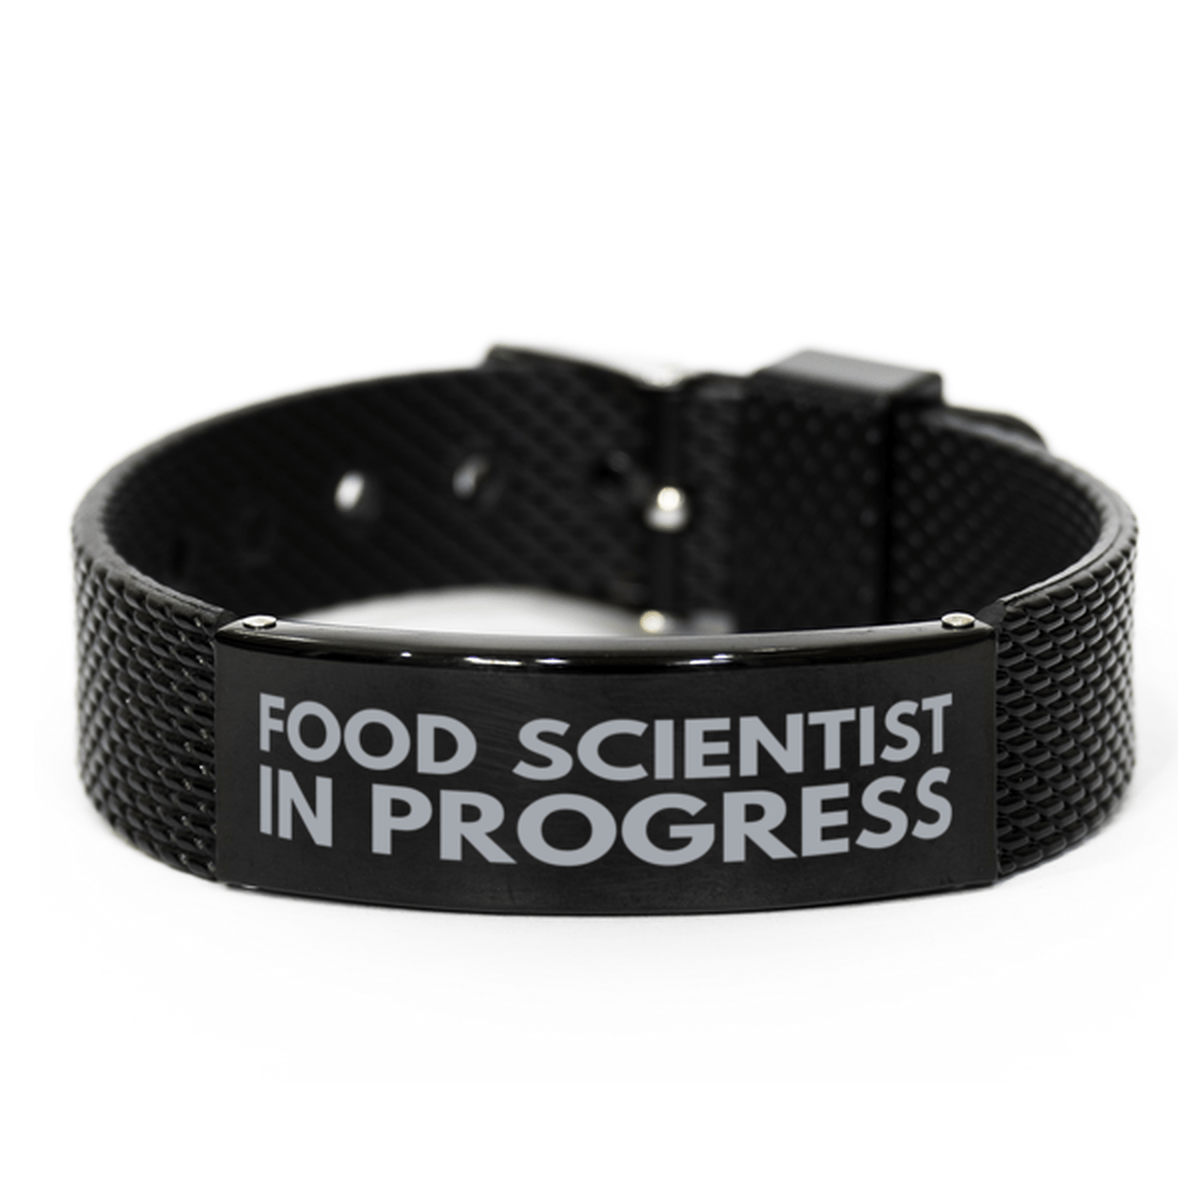 Inspirational Food Scientist Black Shark Mesh Bracelet, Food Scientist In Progress, Best Graduation Gifts for Students